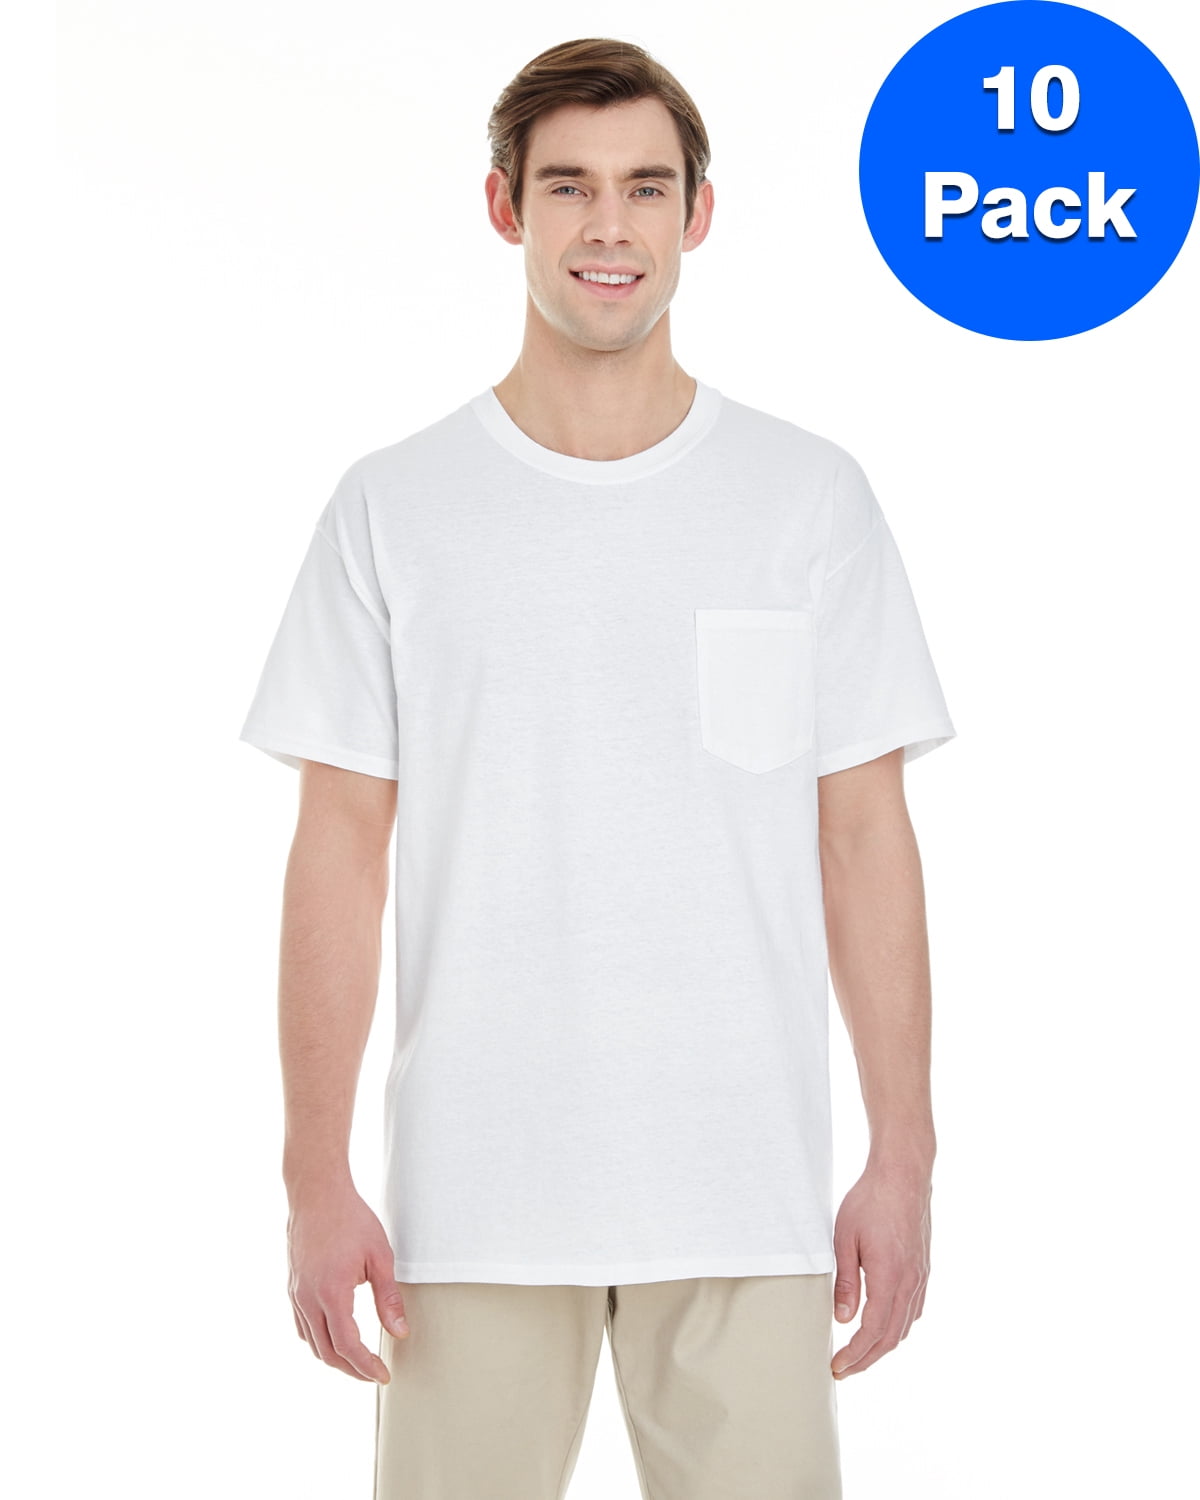 Mens Heavy Cotton T-Shirt with a Pocket 10 Pack - Walmart.com